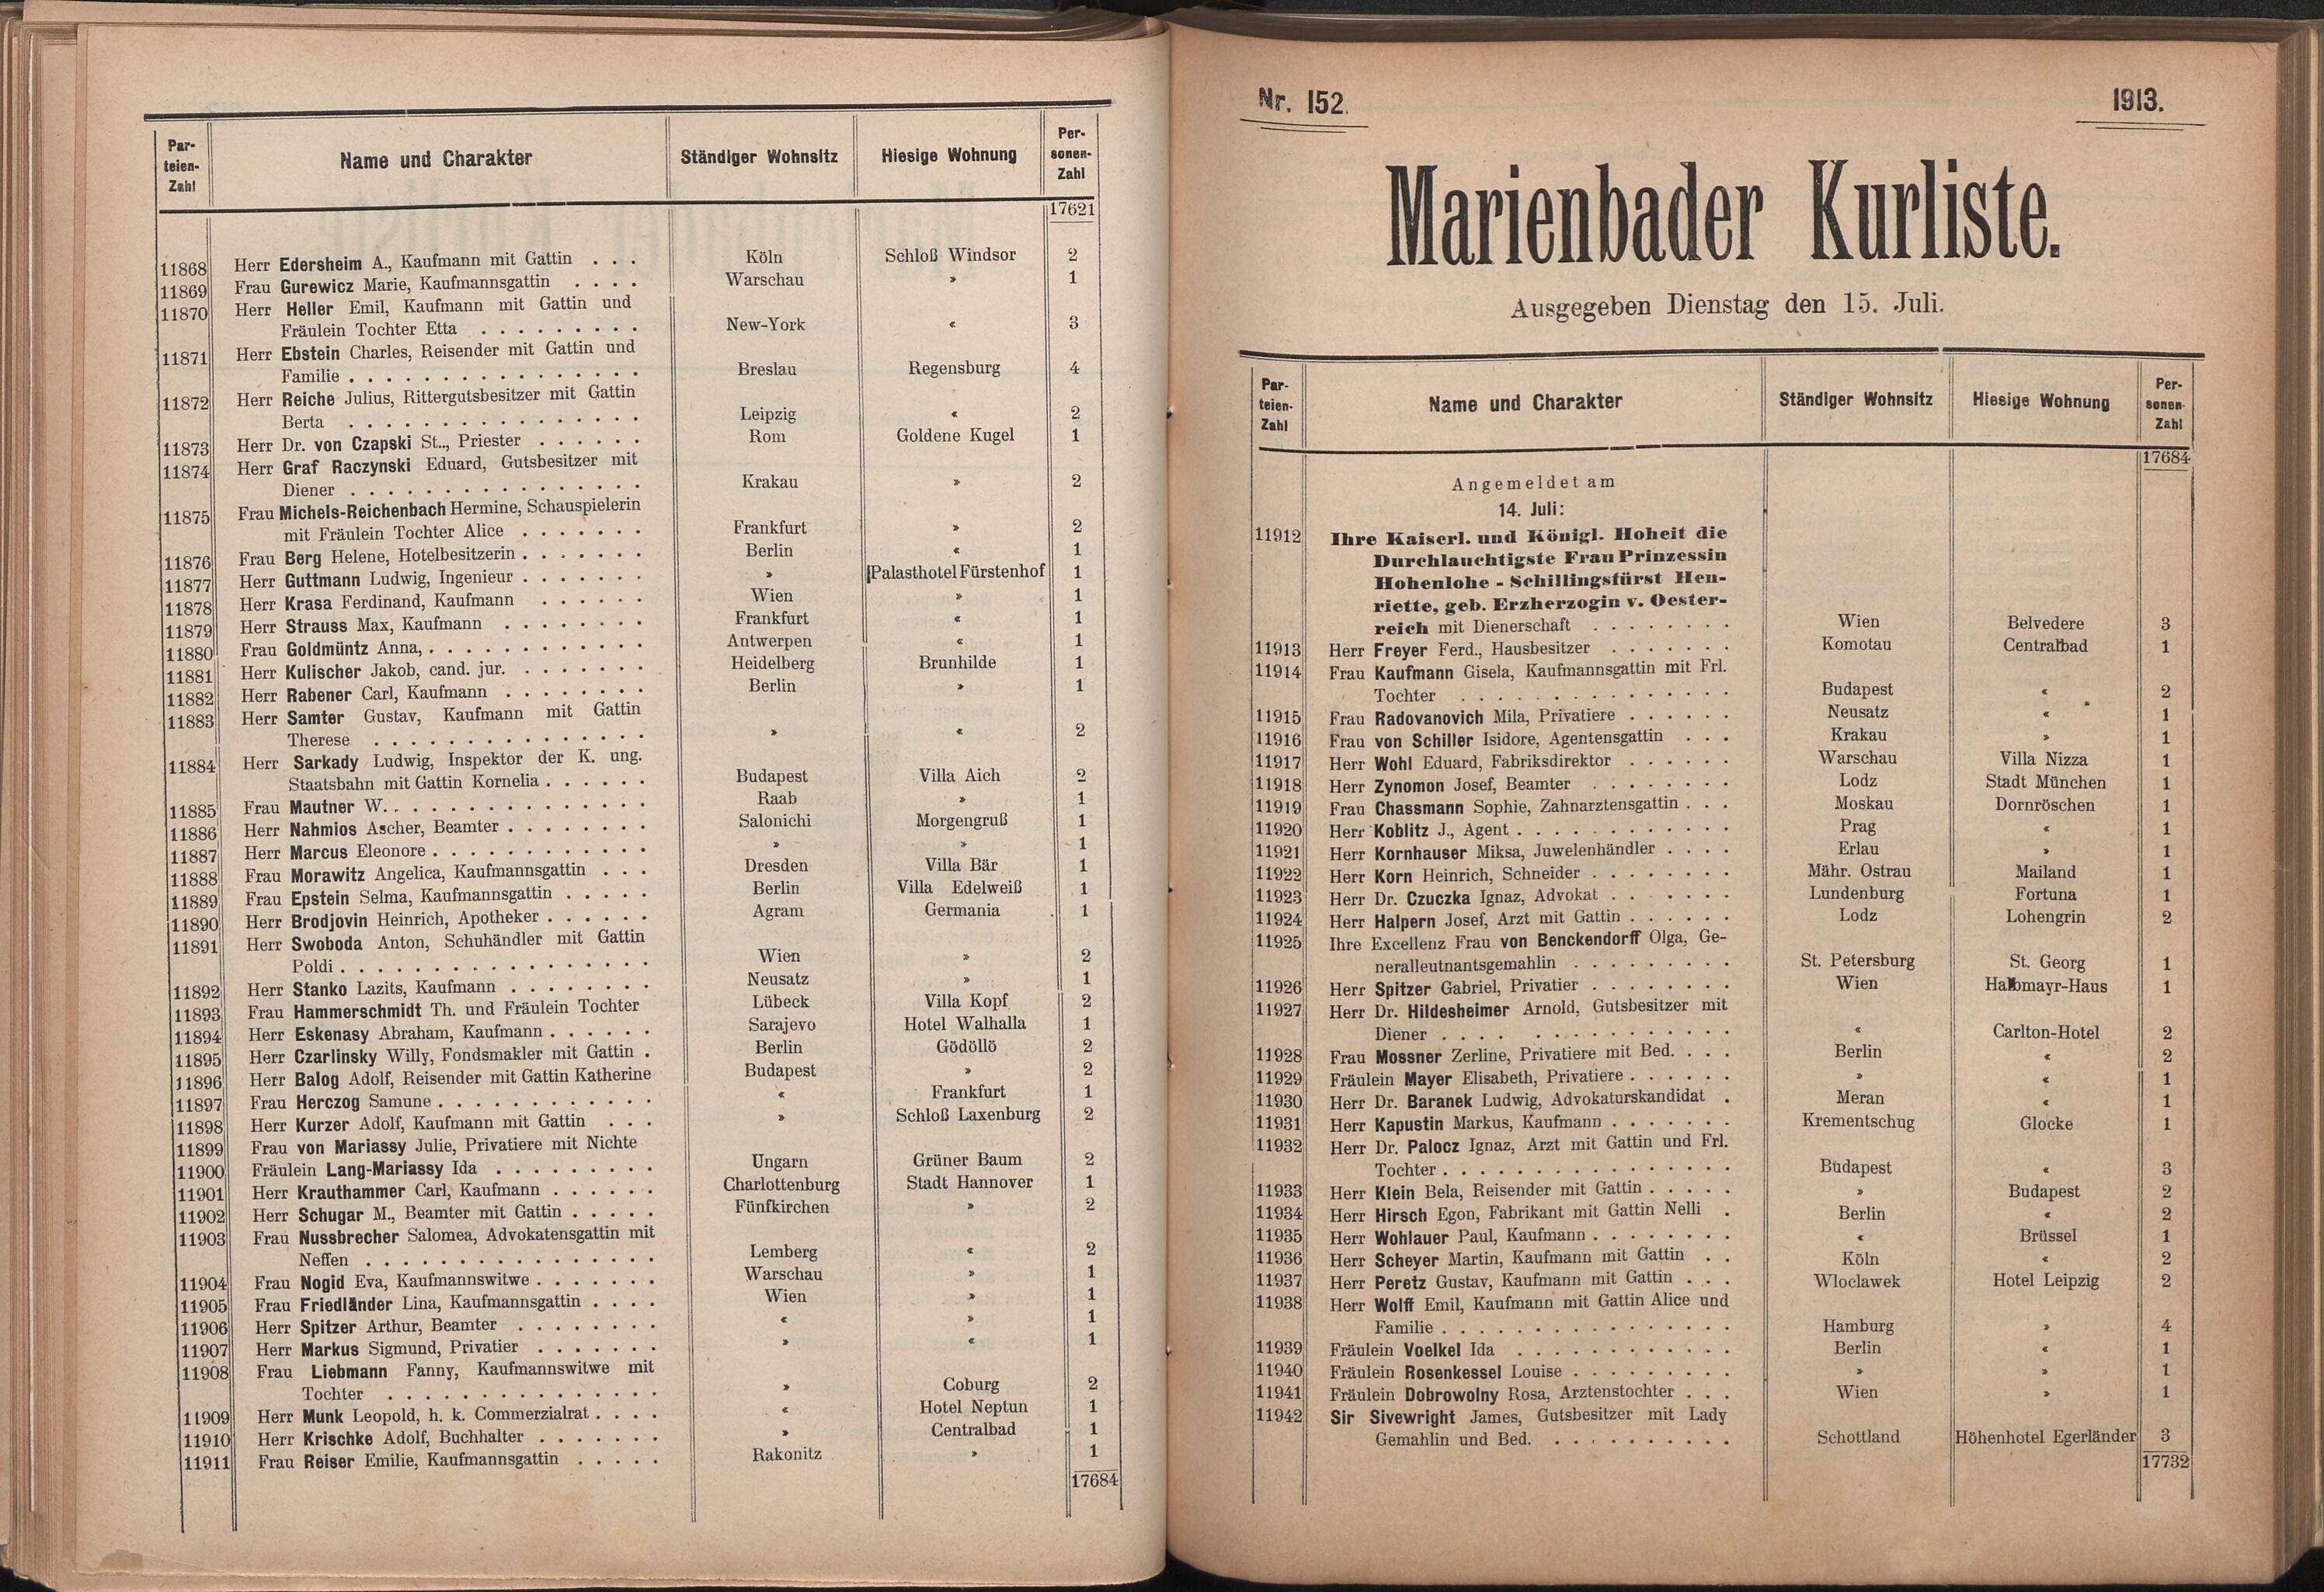 169. soap-ch_knihovna_marienbader-kurliste-1913_1690